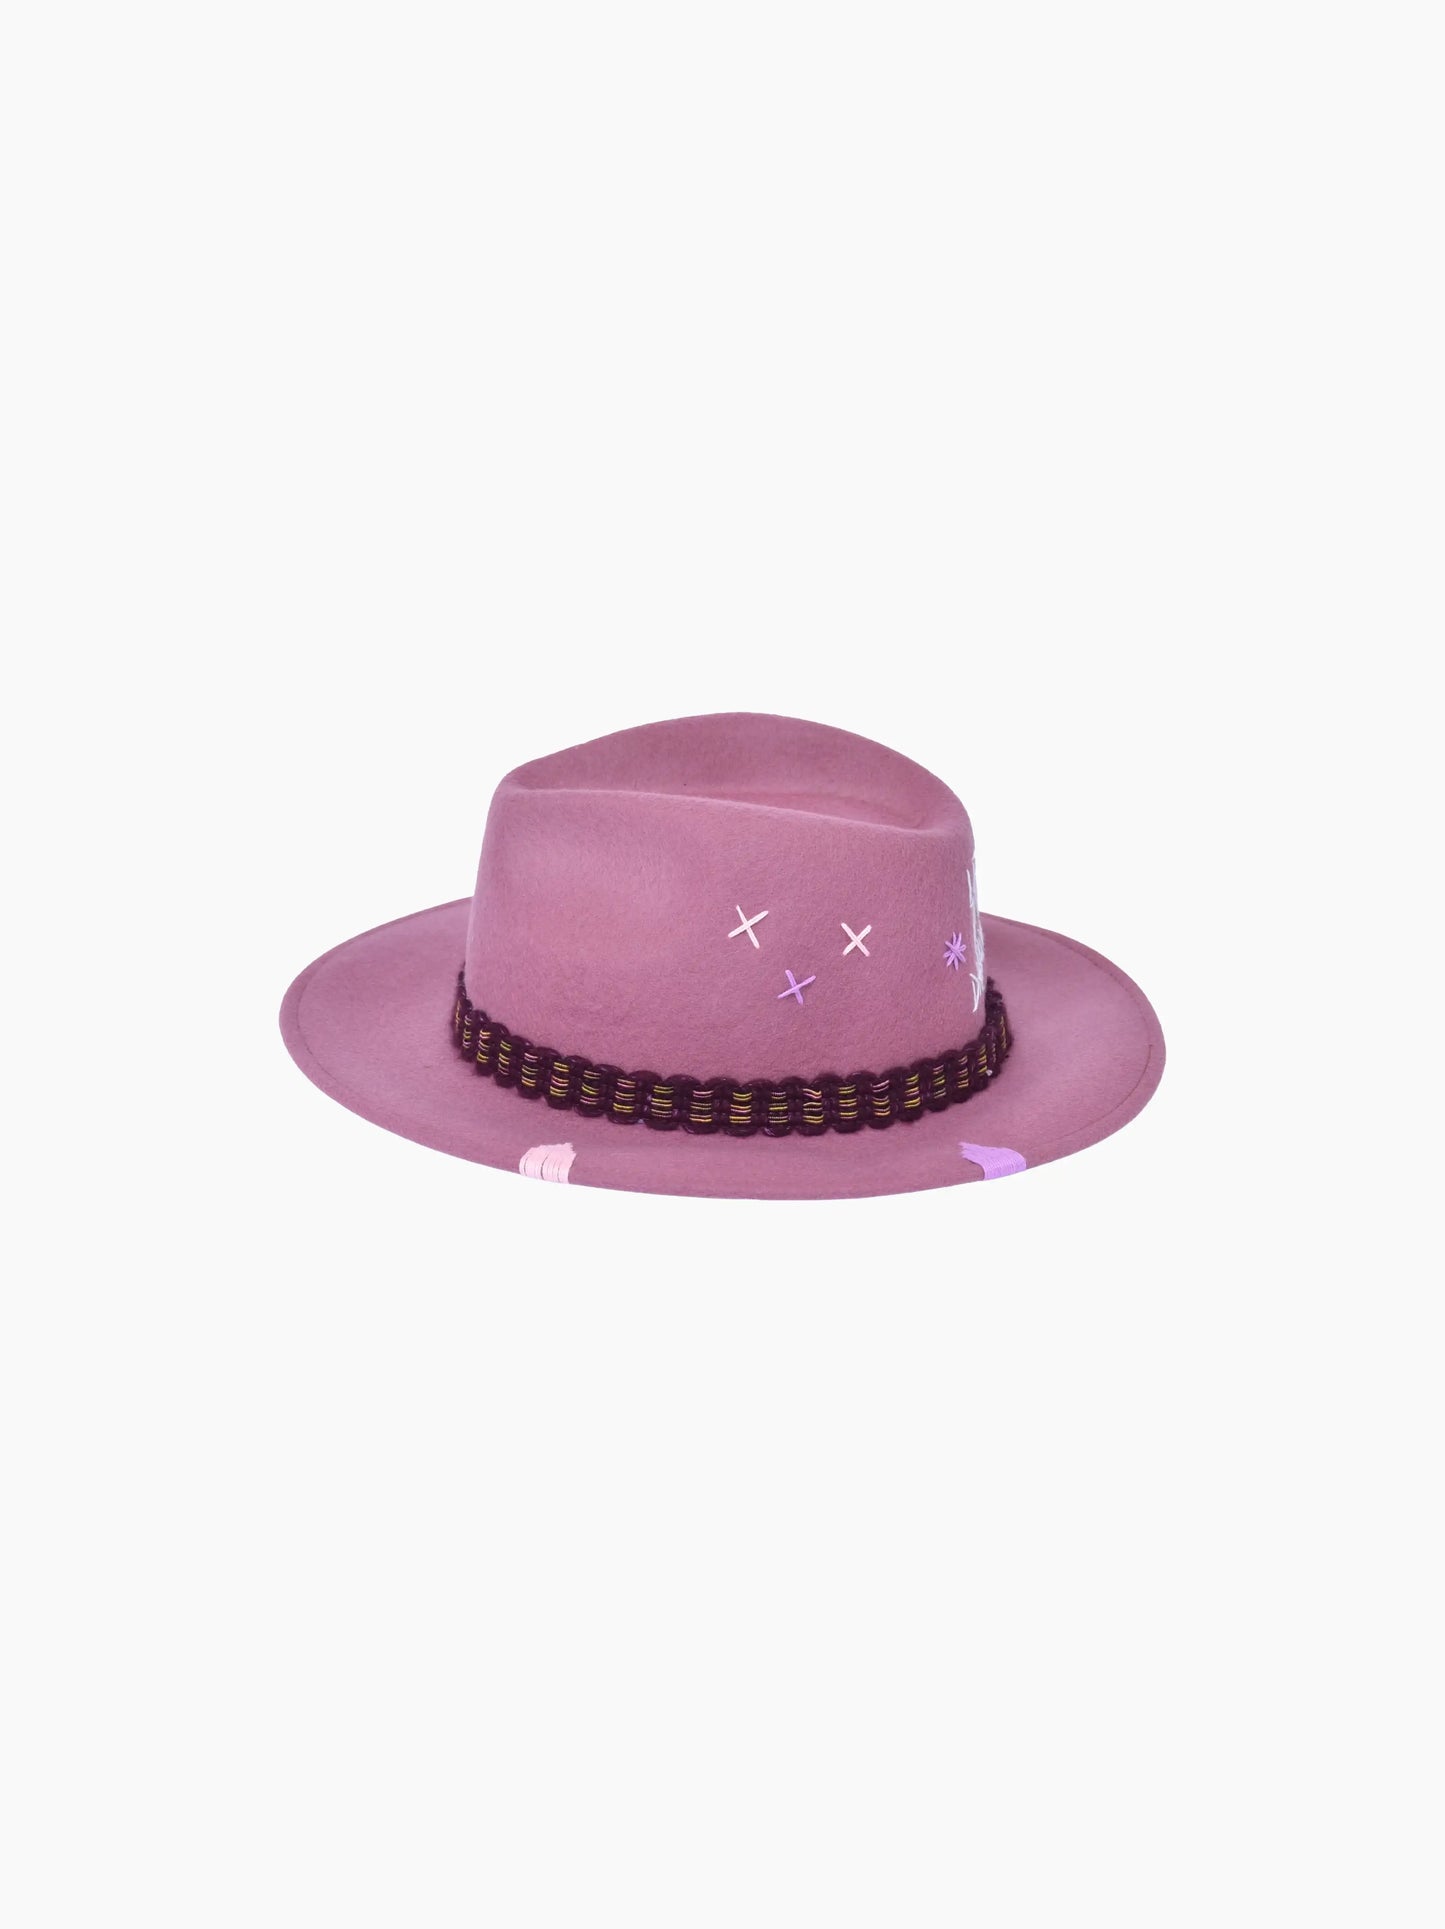 Pink Lost In My Dreams Wool Hat